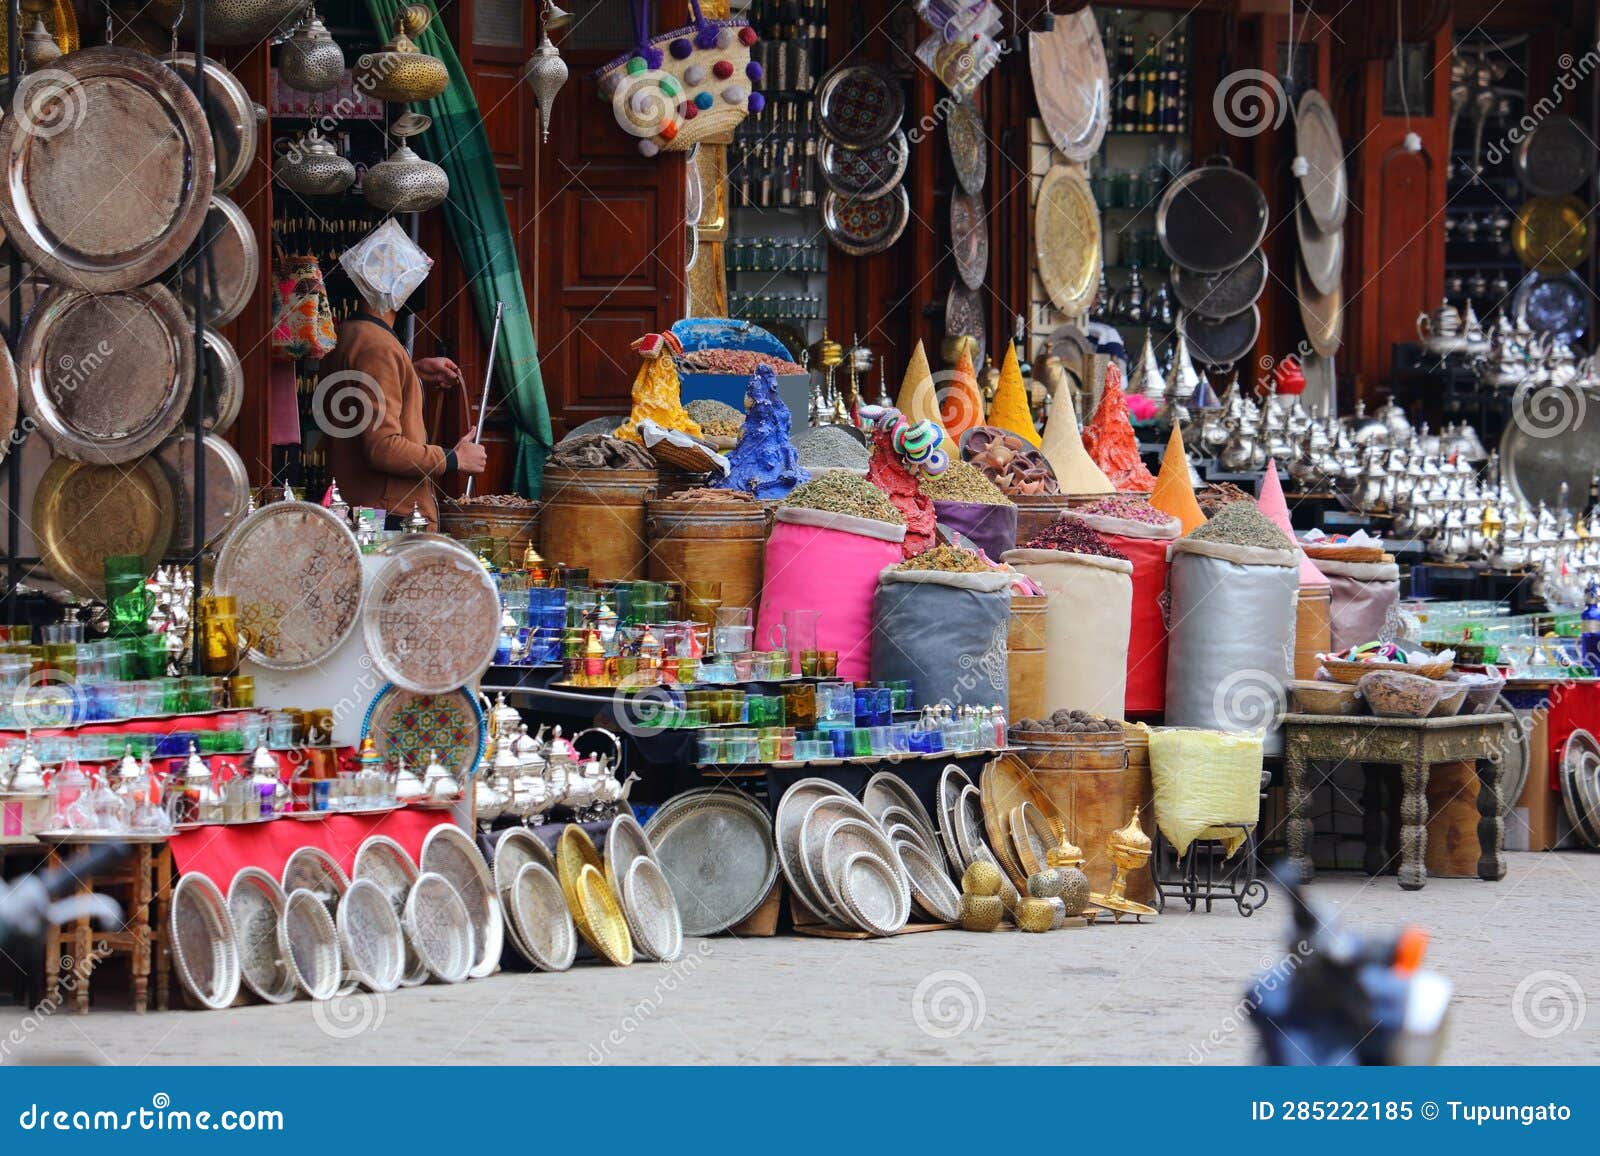 Moroccan Handicraft in Marrakech Stock Image - Image of morocco ...